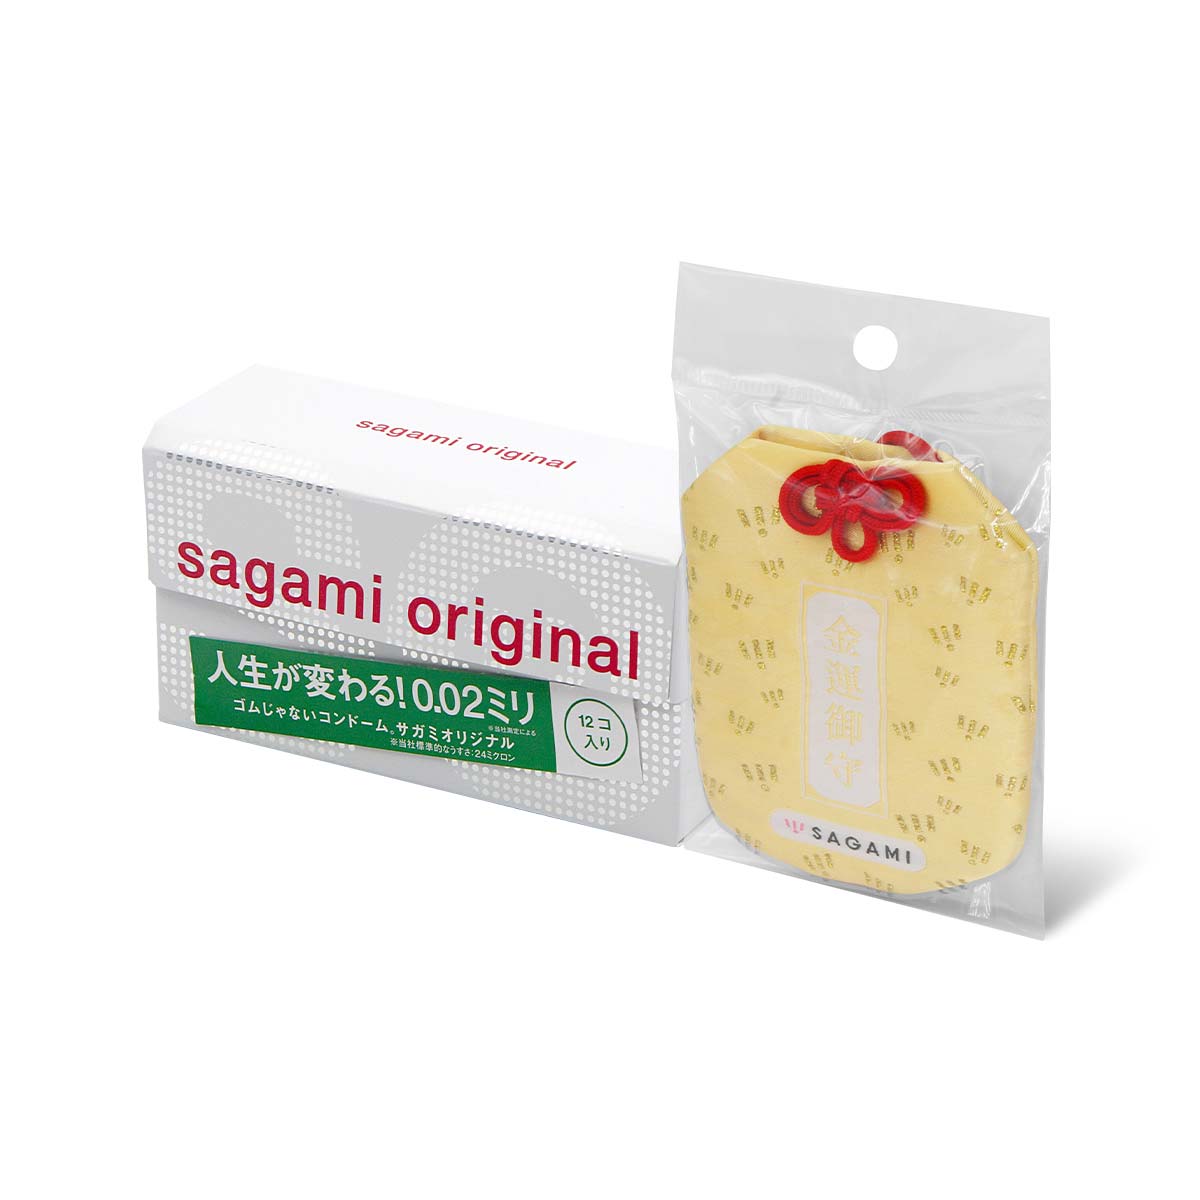 Sagami Original 0.02 12's Pack PU Condom + Sagami Gold Omamori-thumb_1